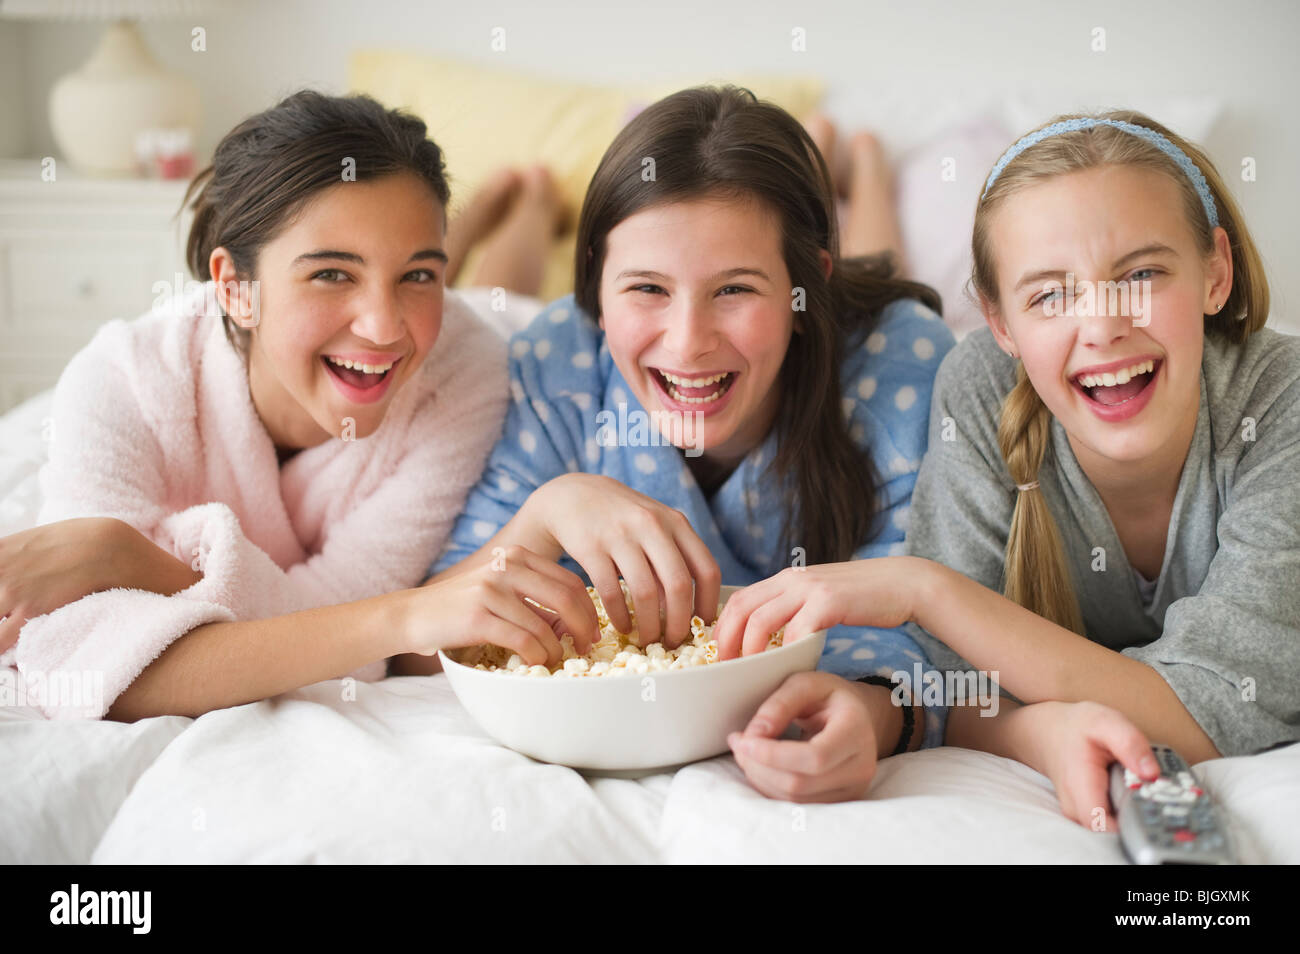 Girls eating popcorn Stock Photo